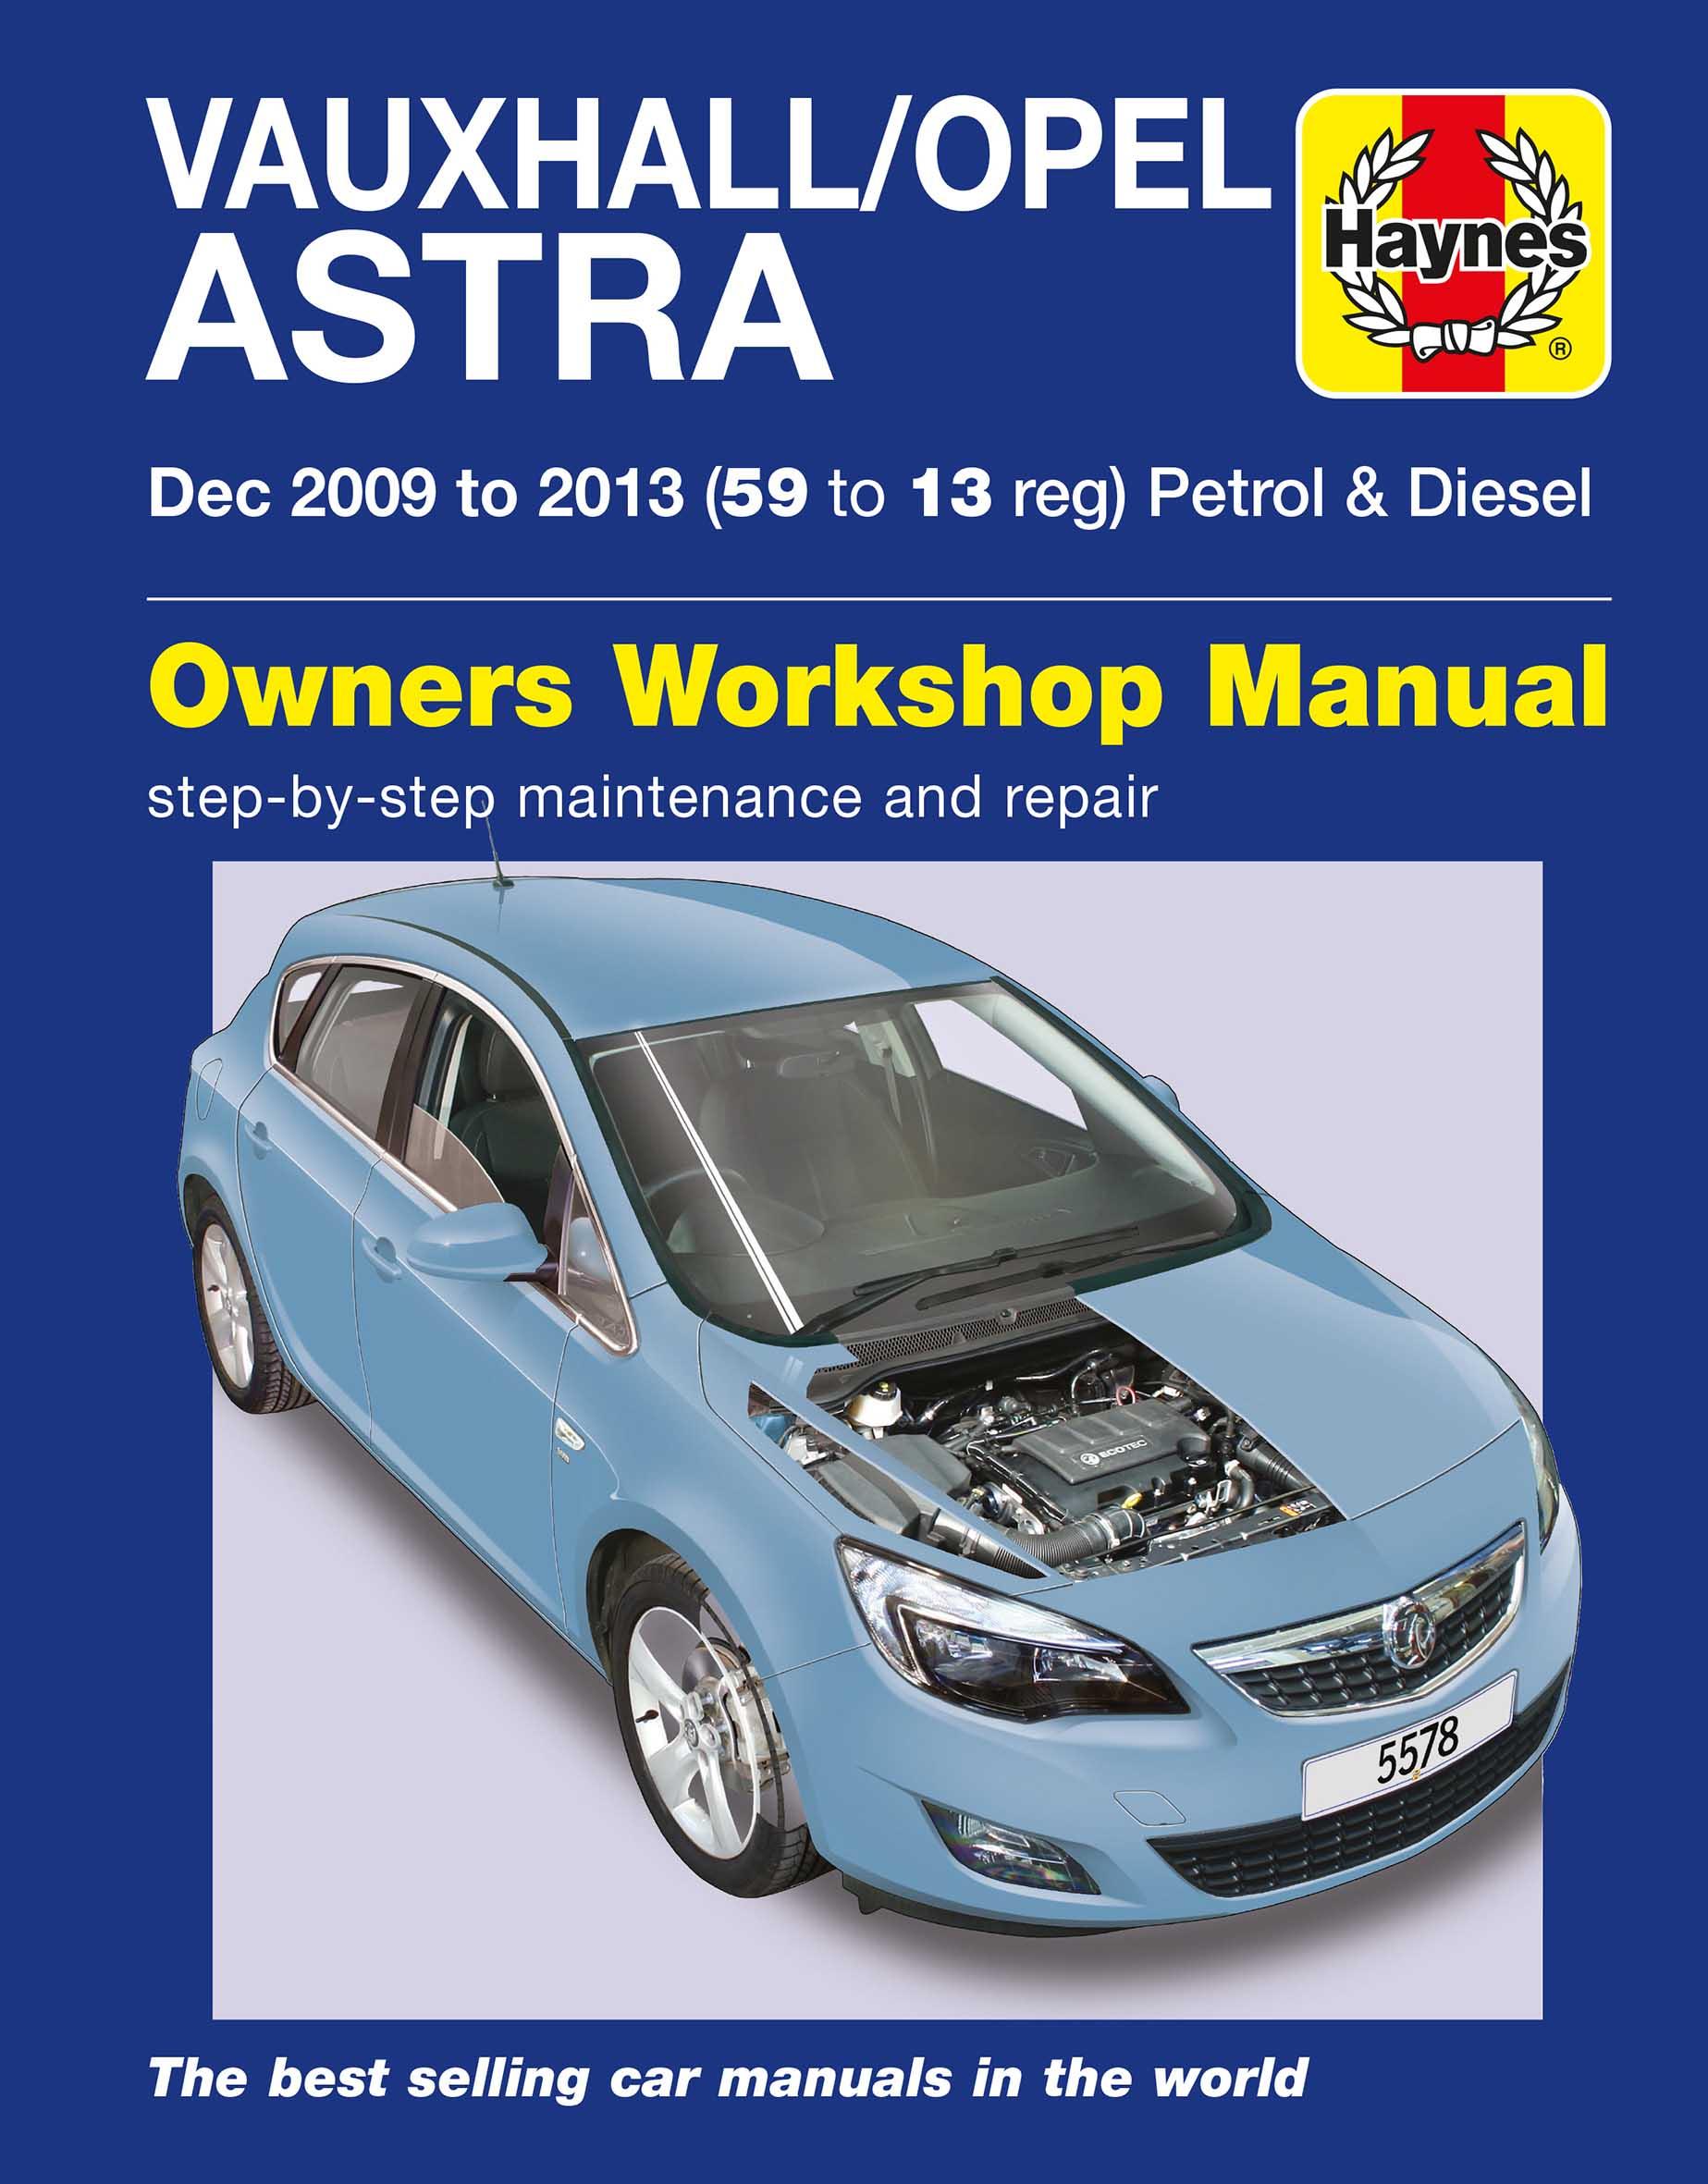 Corsa Astra Vectra tous modèles essence et diesel. VAUXHALL ASTRA service book